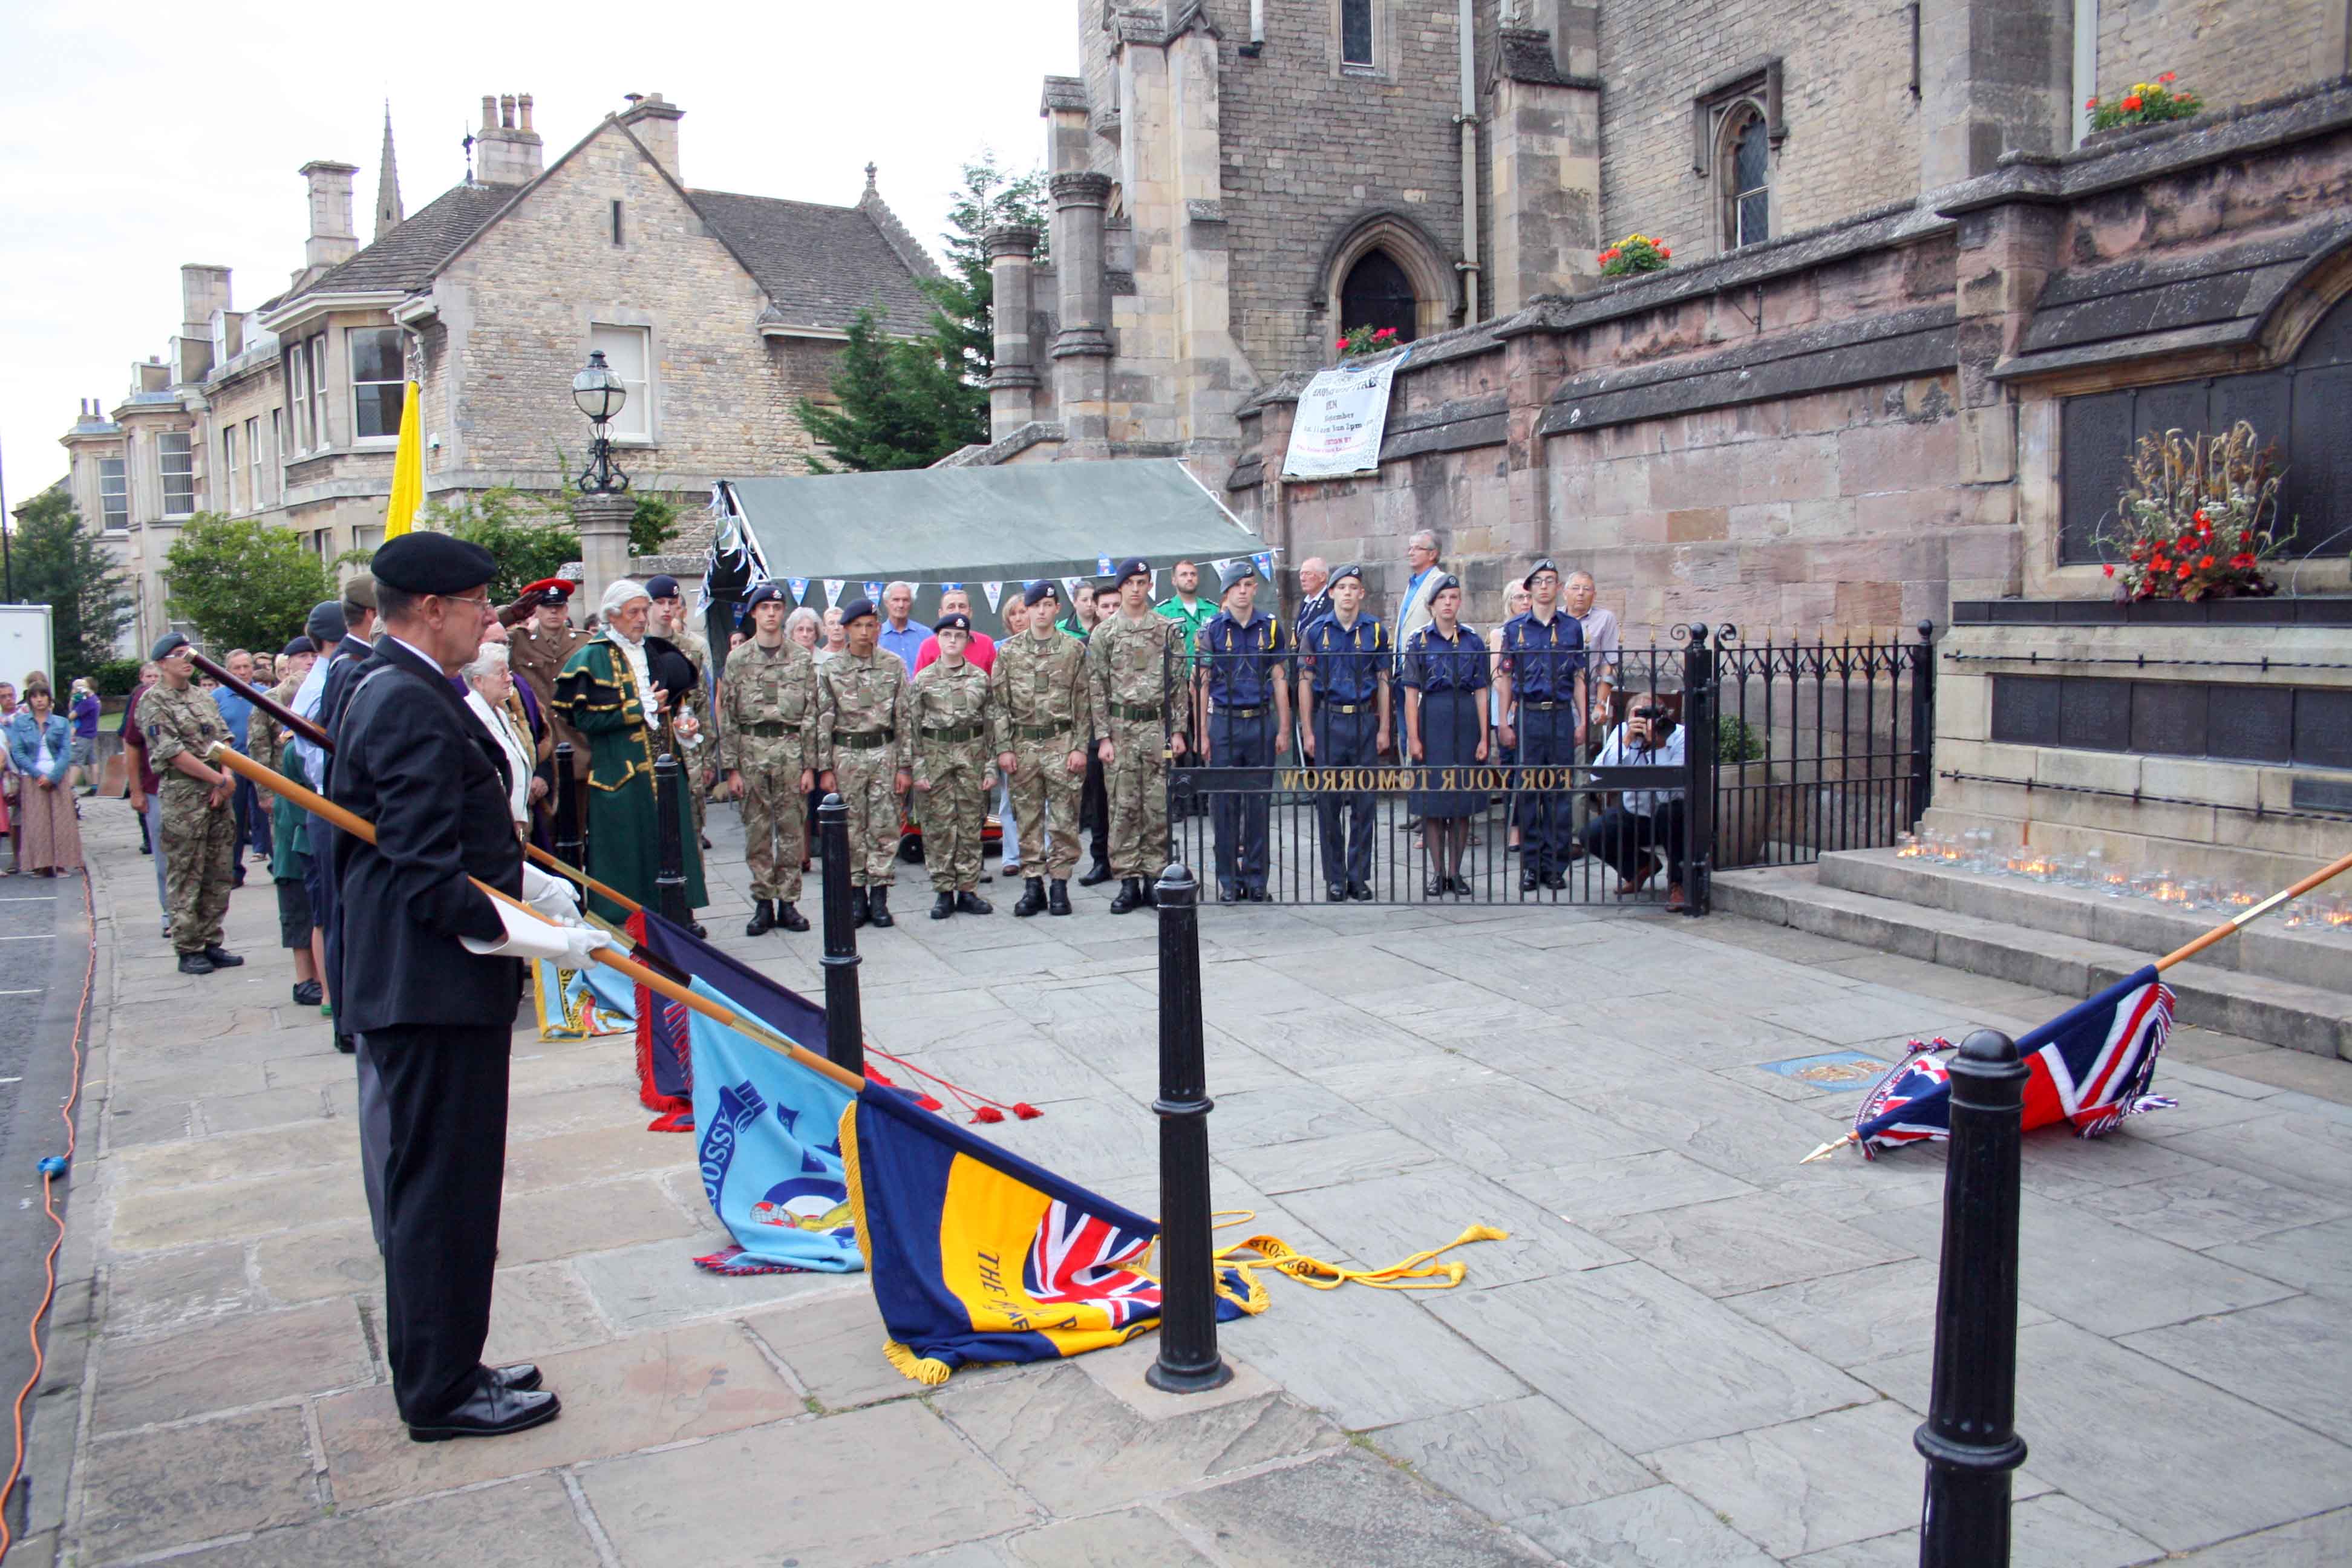 commemoration festival - at stamford war memorial 4-8-14.jpg